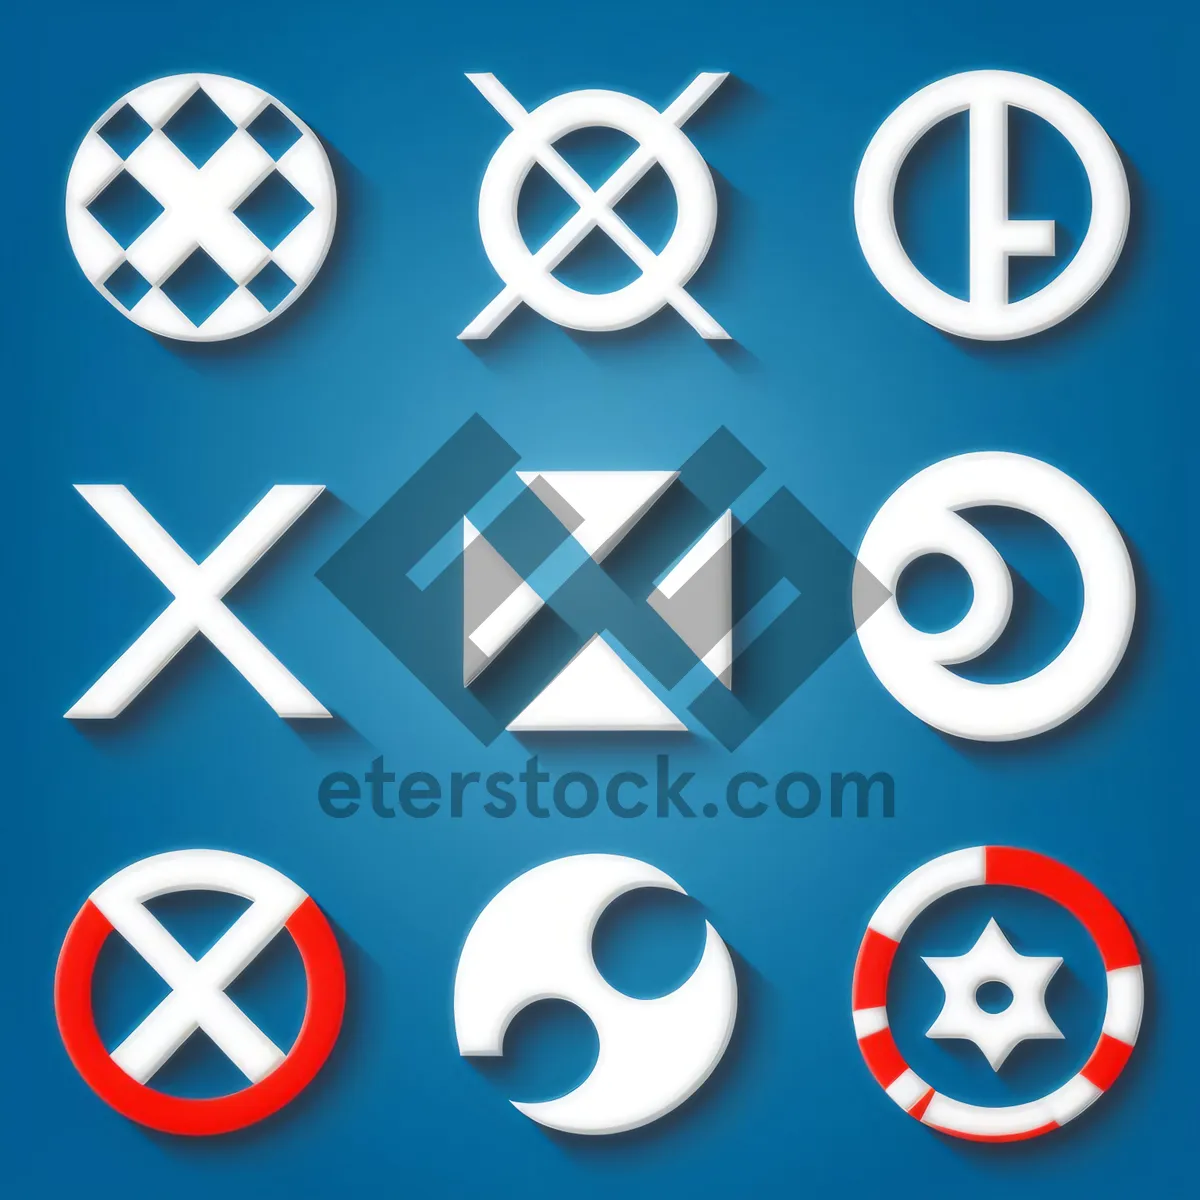 Picture of Web Button Icons: Circle Arrow Symbols Set